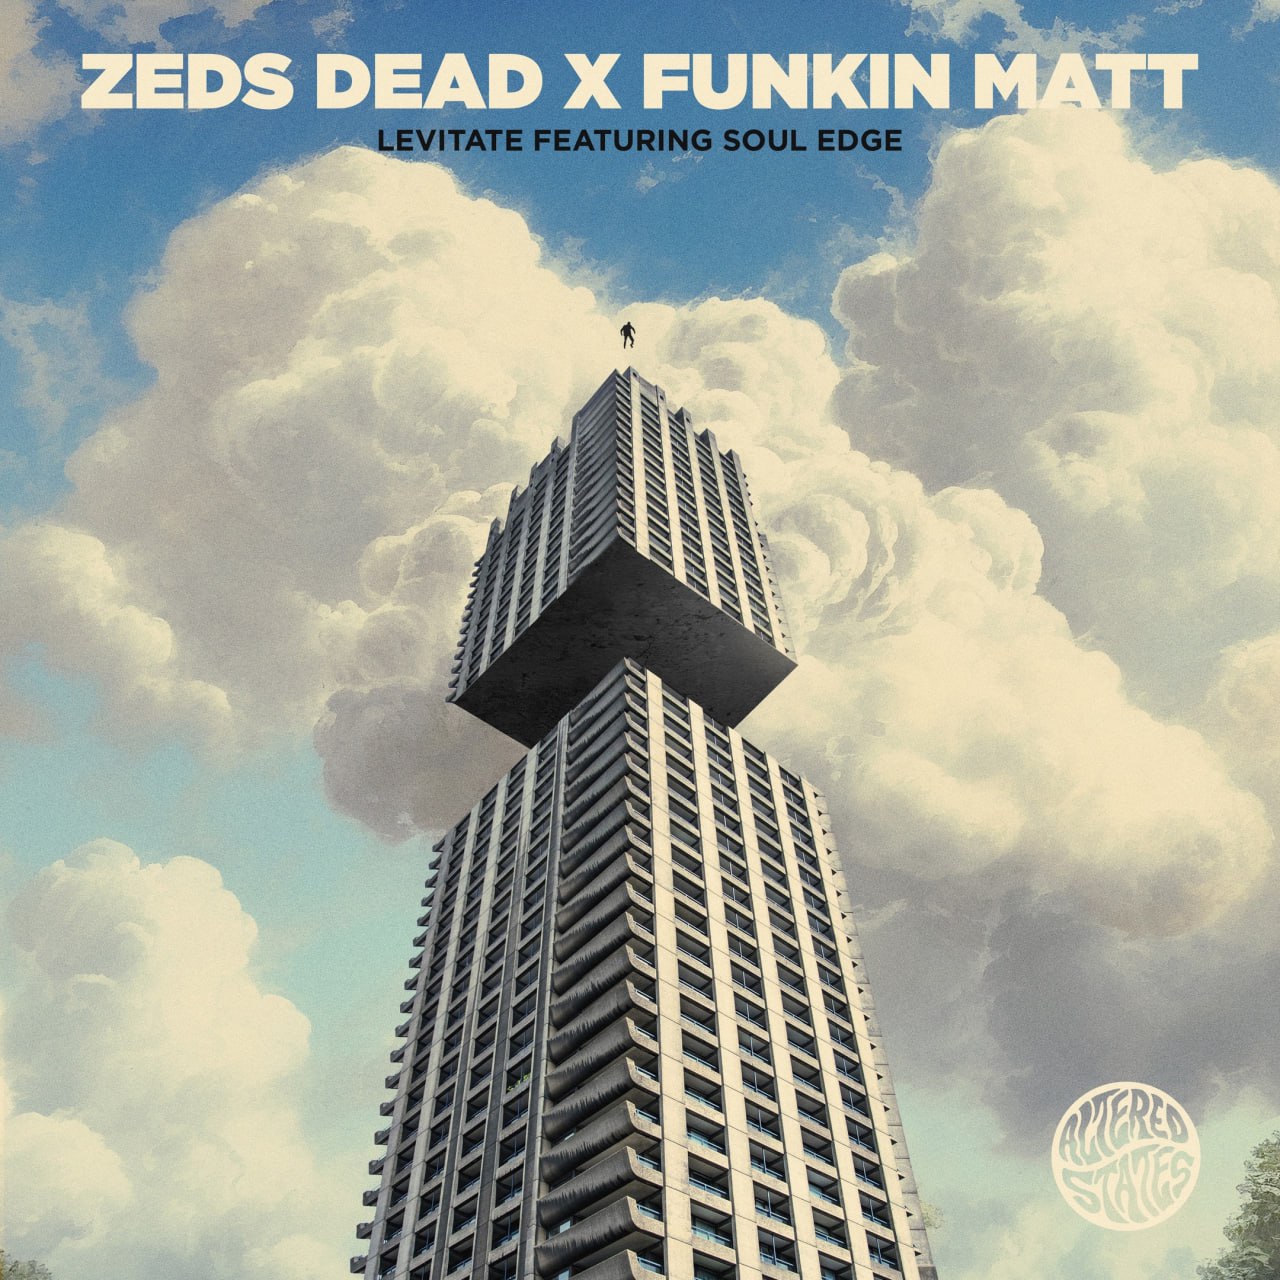 Zeds Dead And Funkin Matt Feat. Soul Edge - Levitate (extended Mix) on Revolution Radio